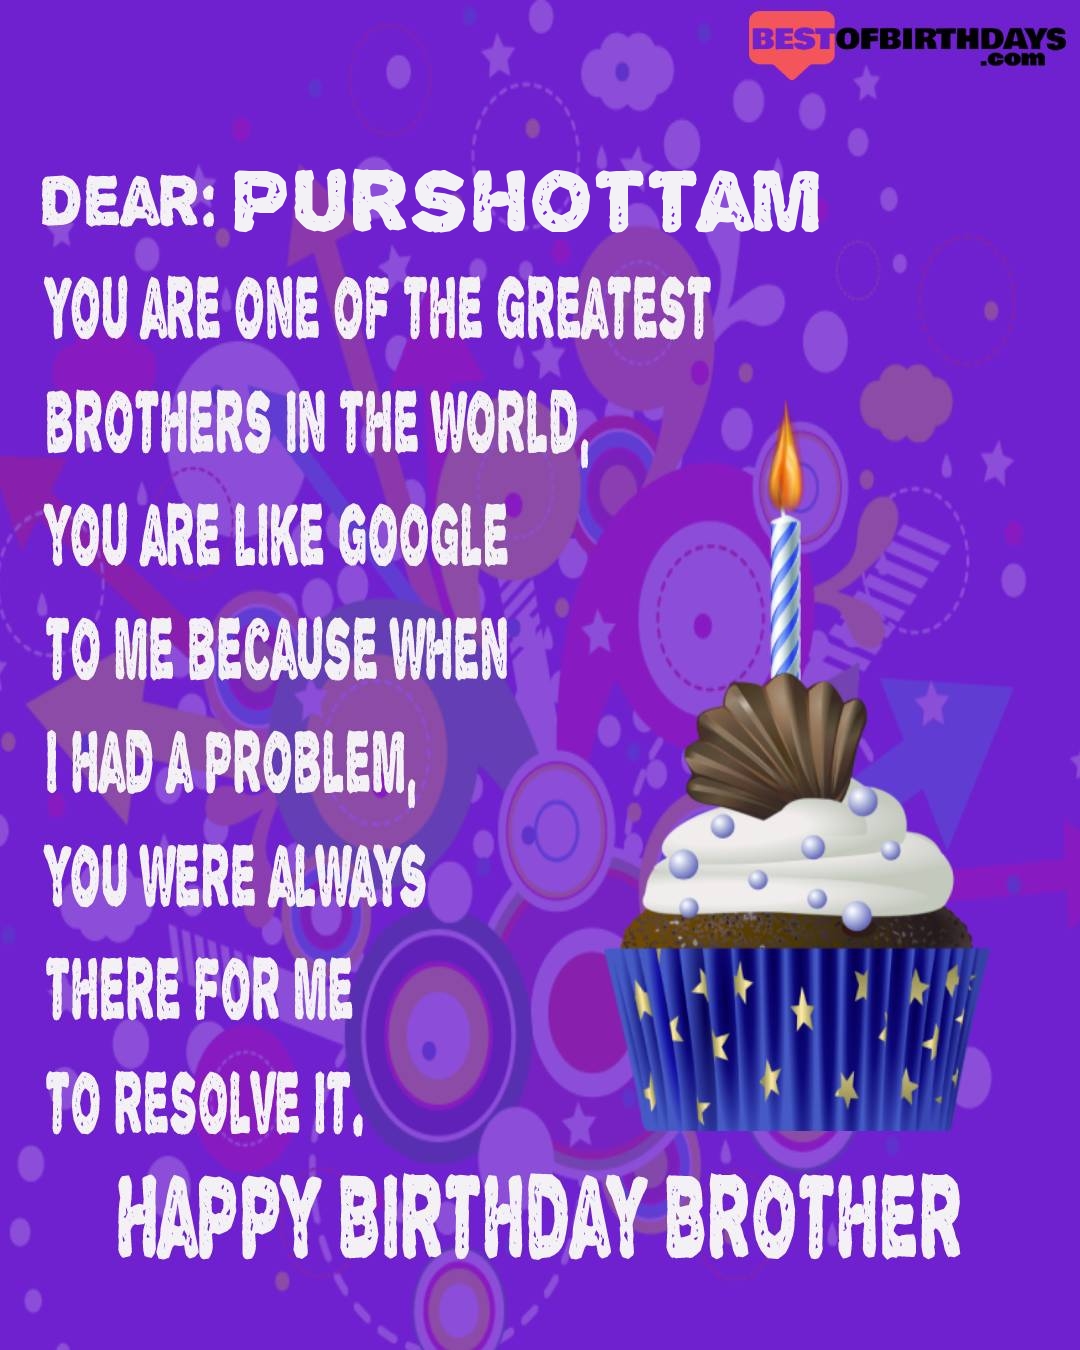 Happy birthday purshottam bhai brother bro